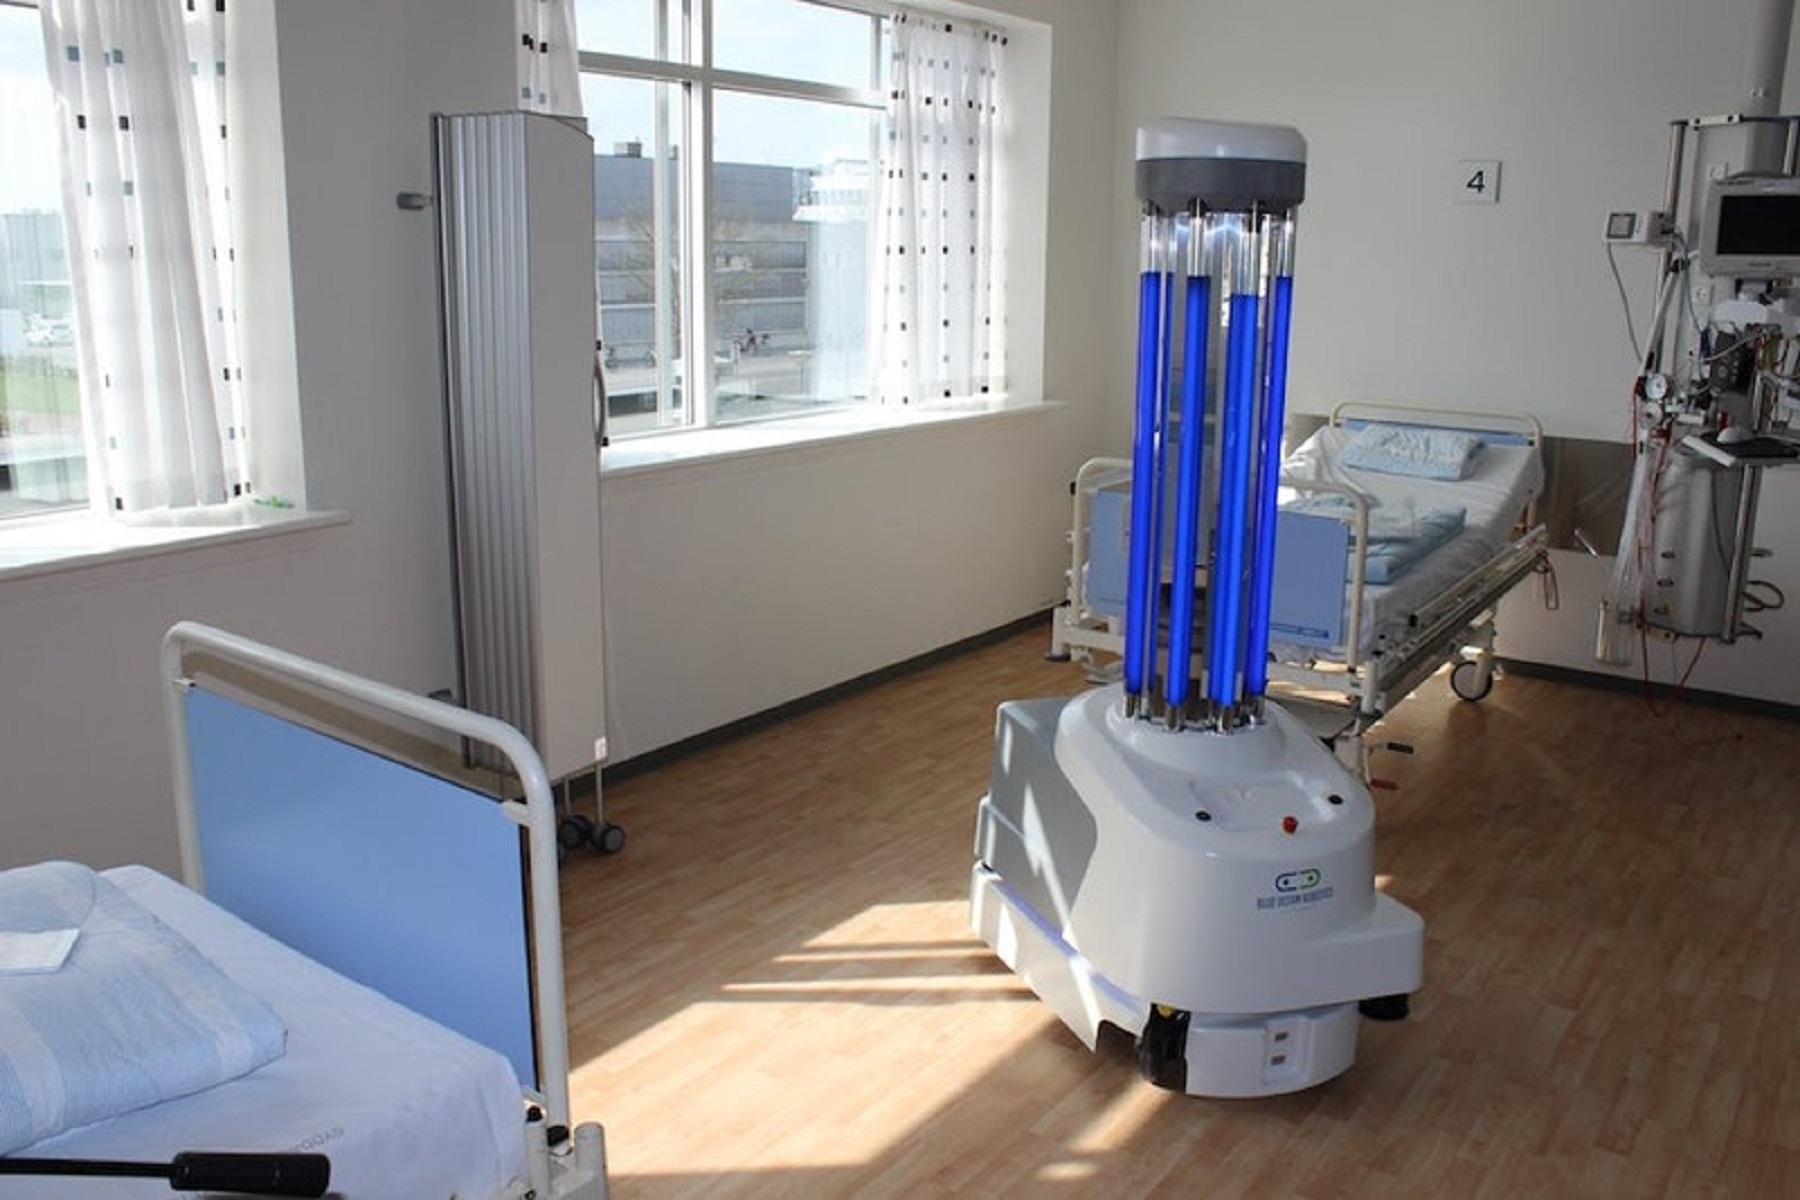 European Commission Νοσοκομεία: Παράδοση 200  ρομπότ απολύμανσης σε νοσοκομεία της Ευρώπης